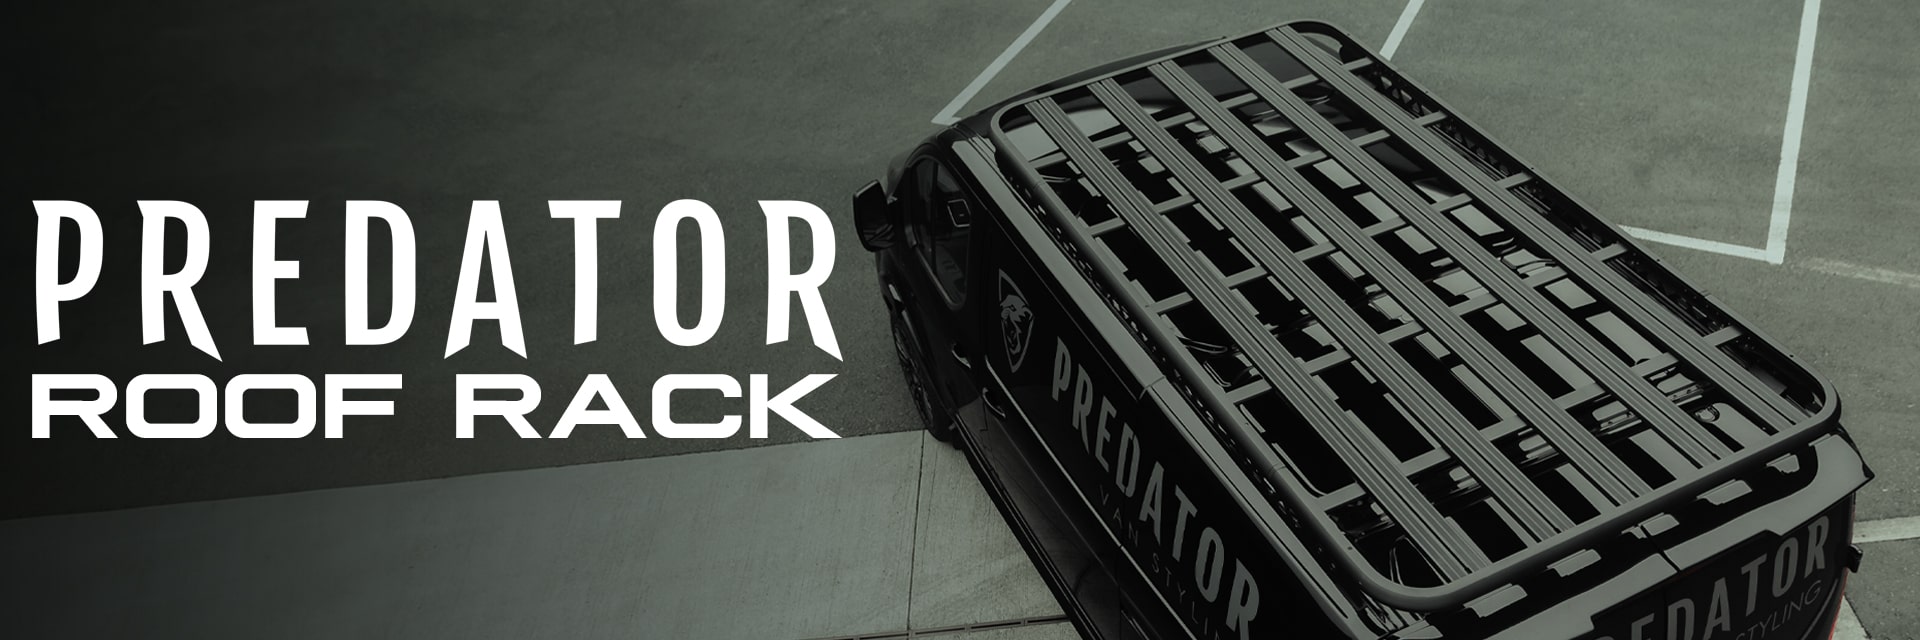 Predator Roof Rack